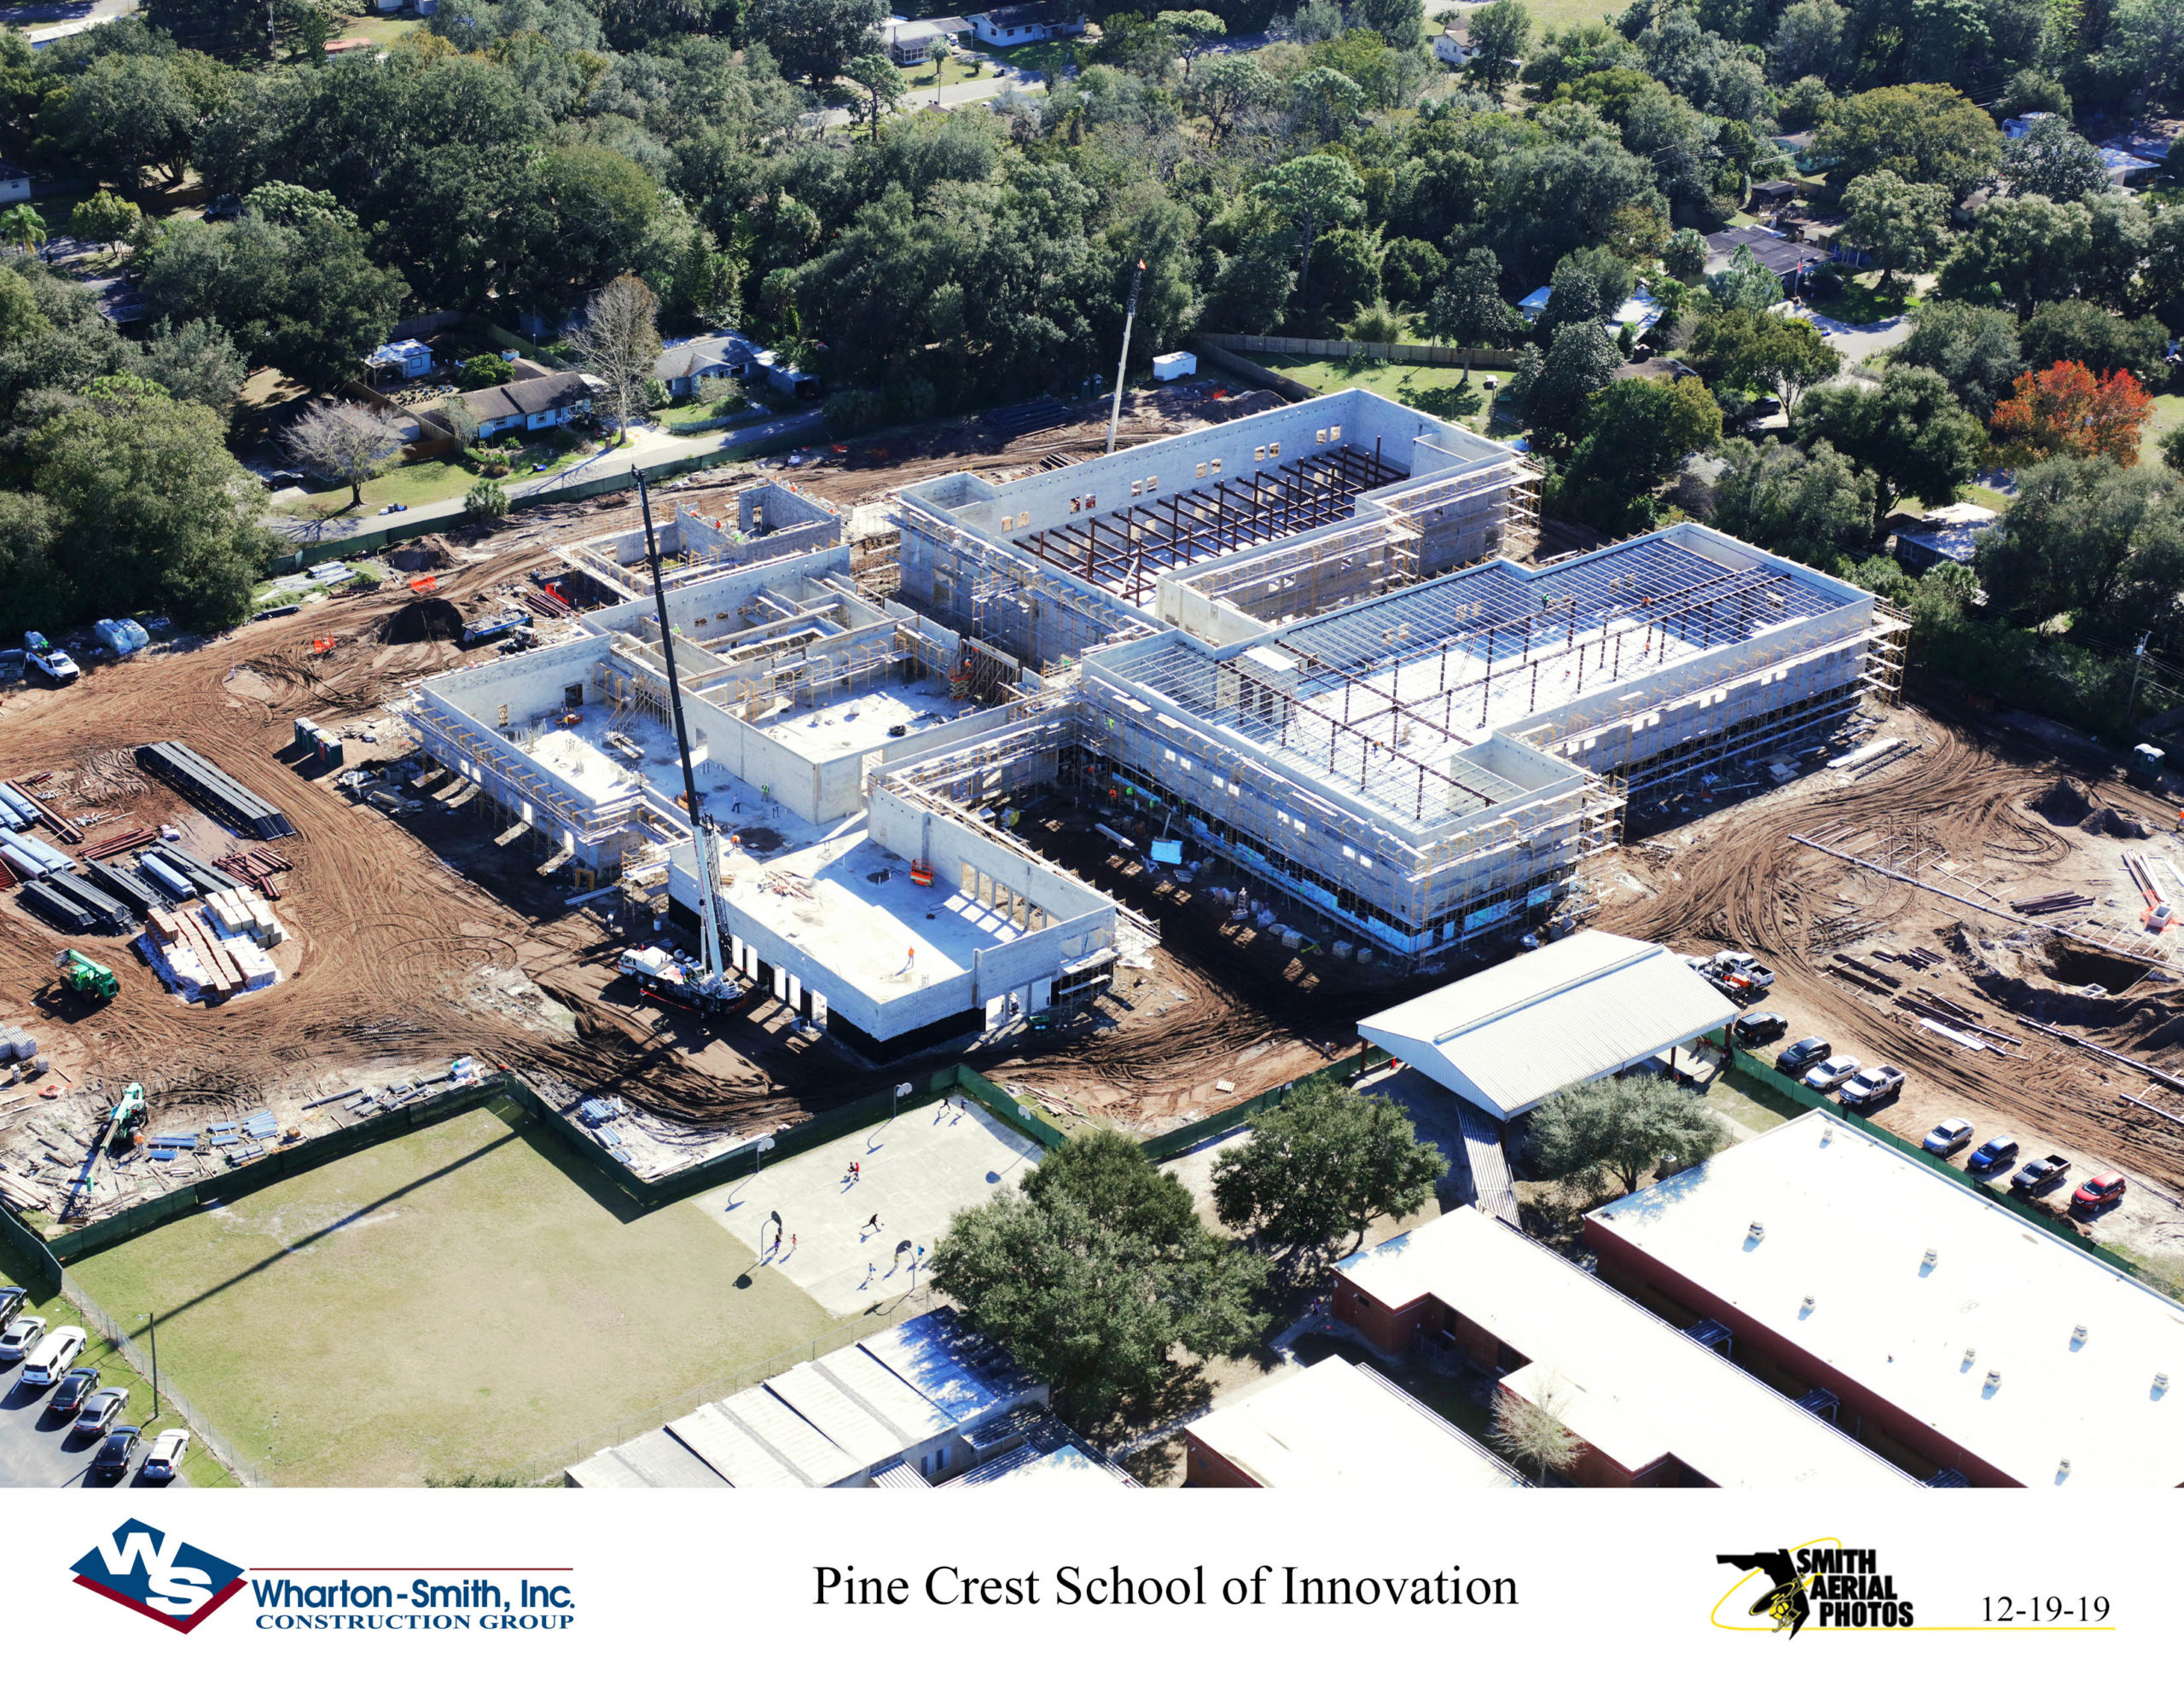 Pine Crest School of Innovation